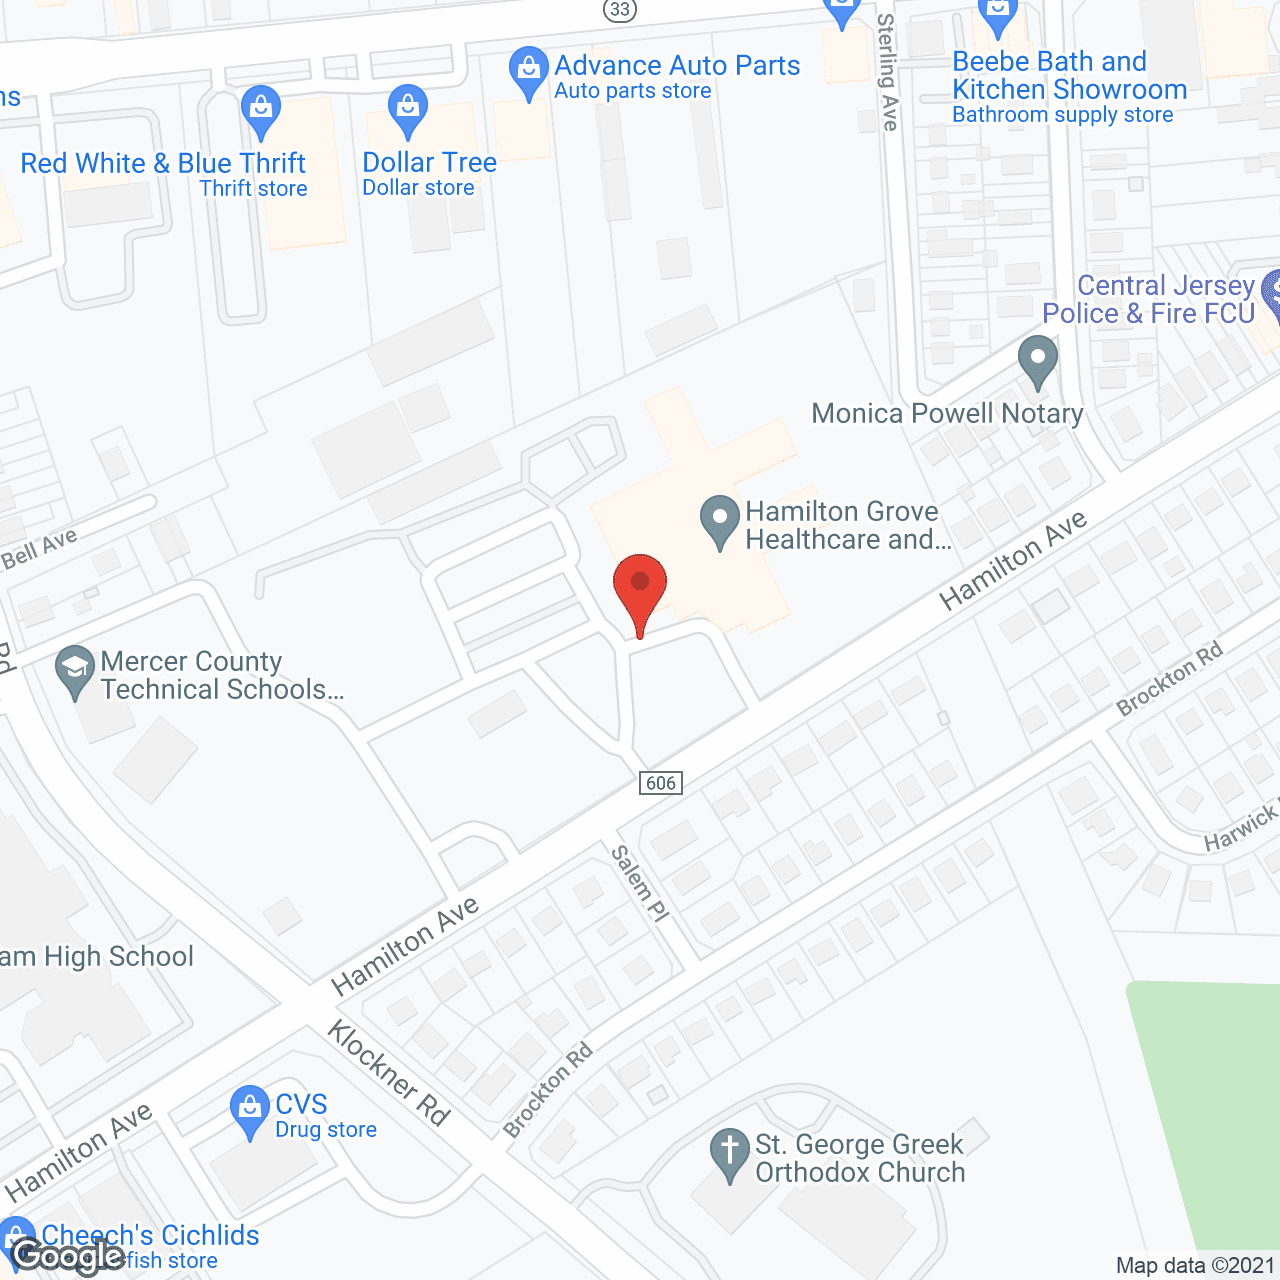 Hamilton Grove Rehabilitation and Healthcare in google map